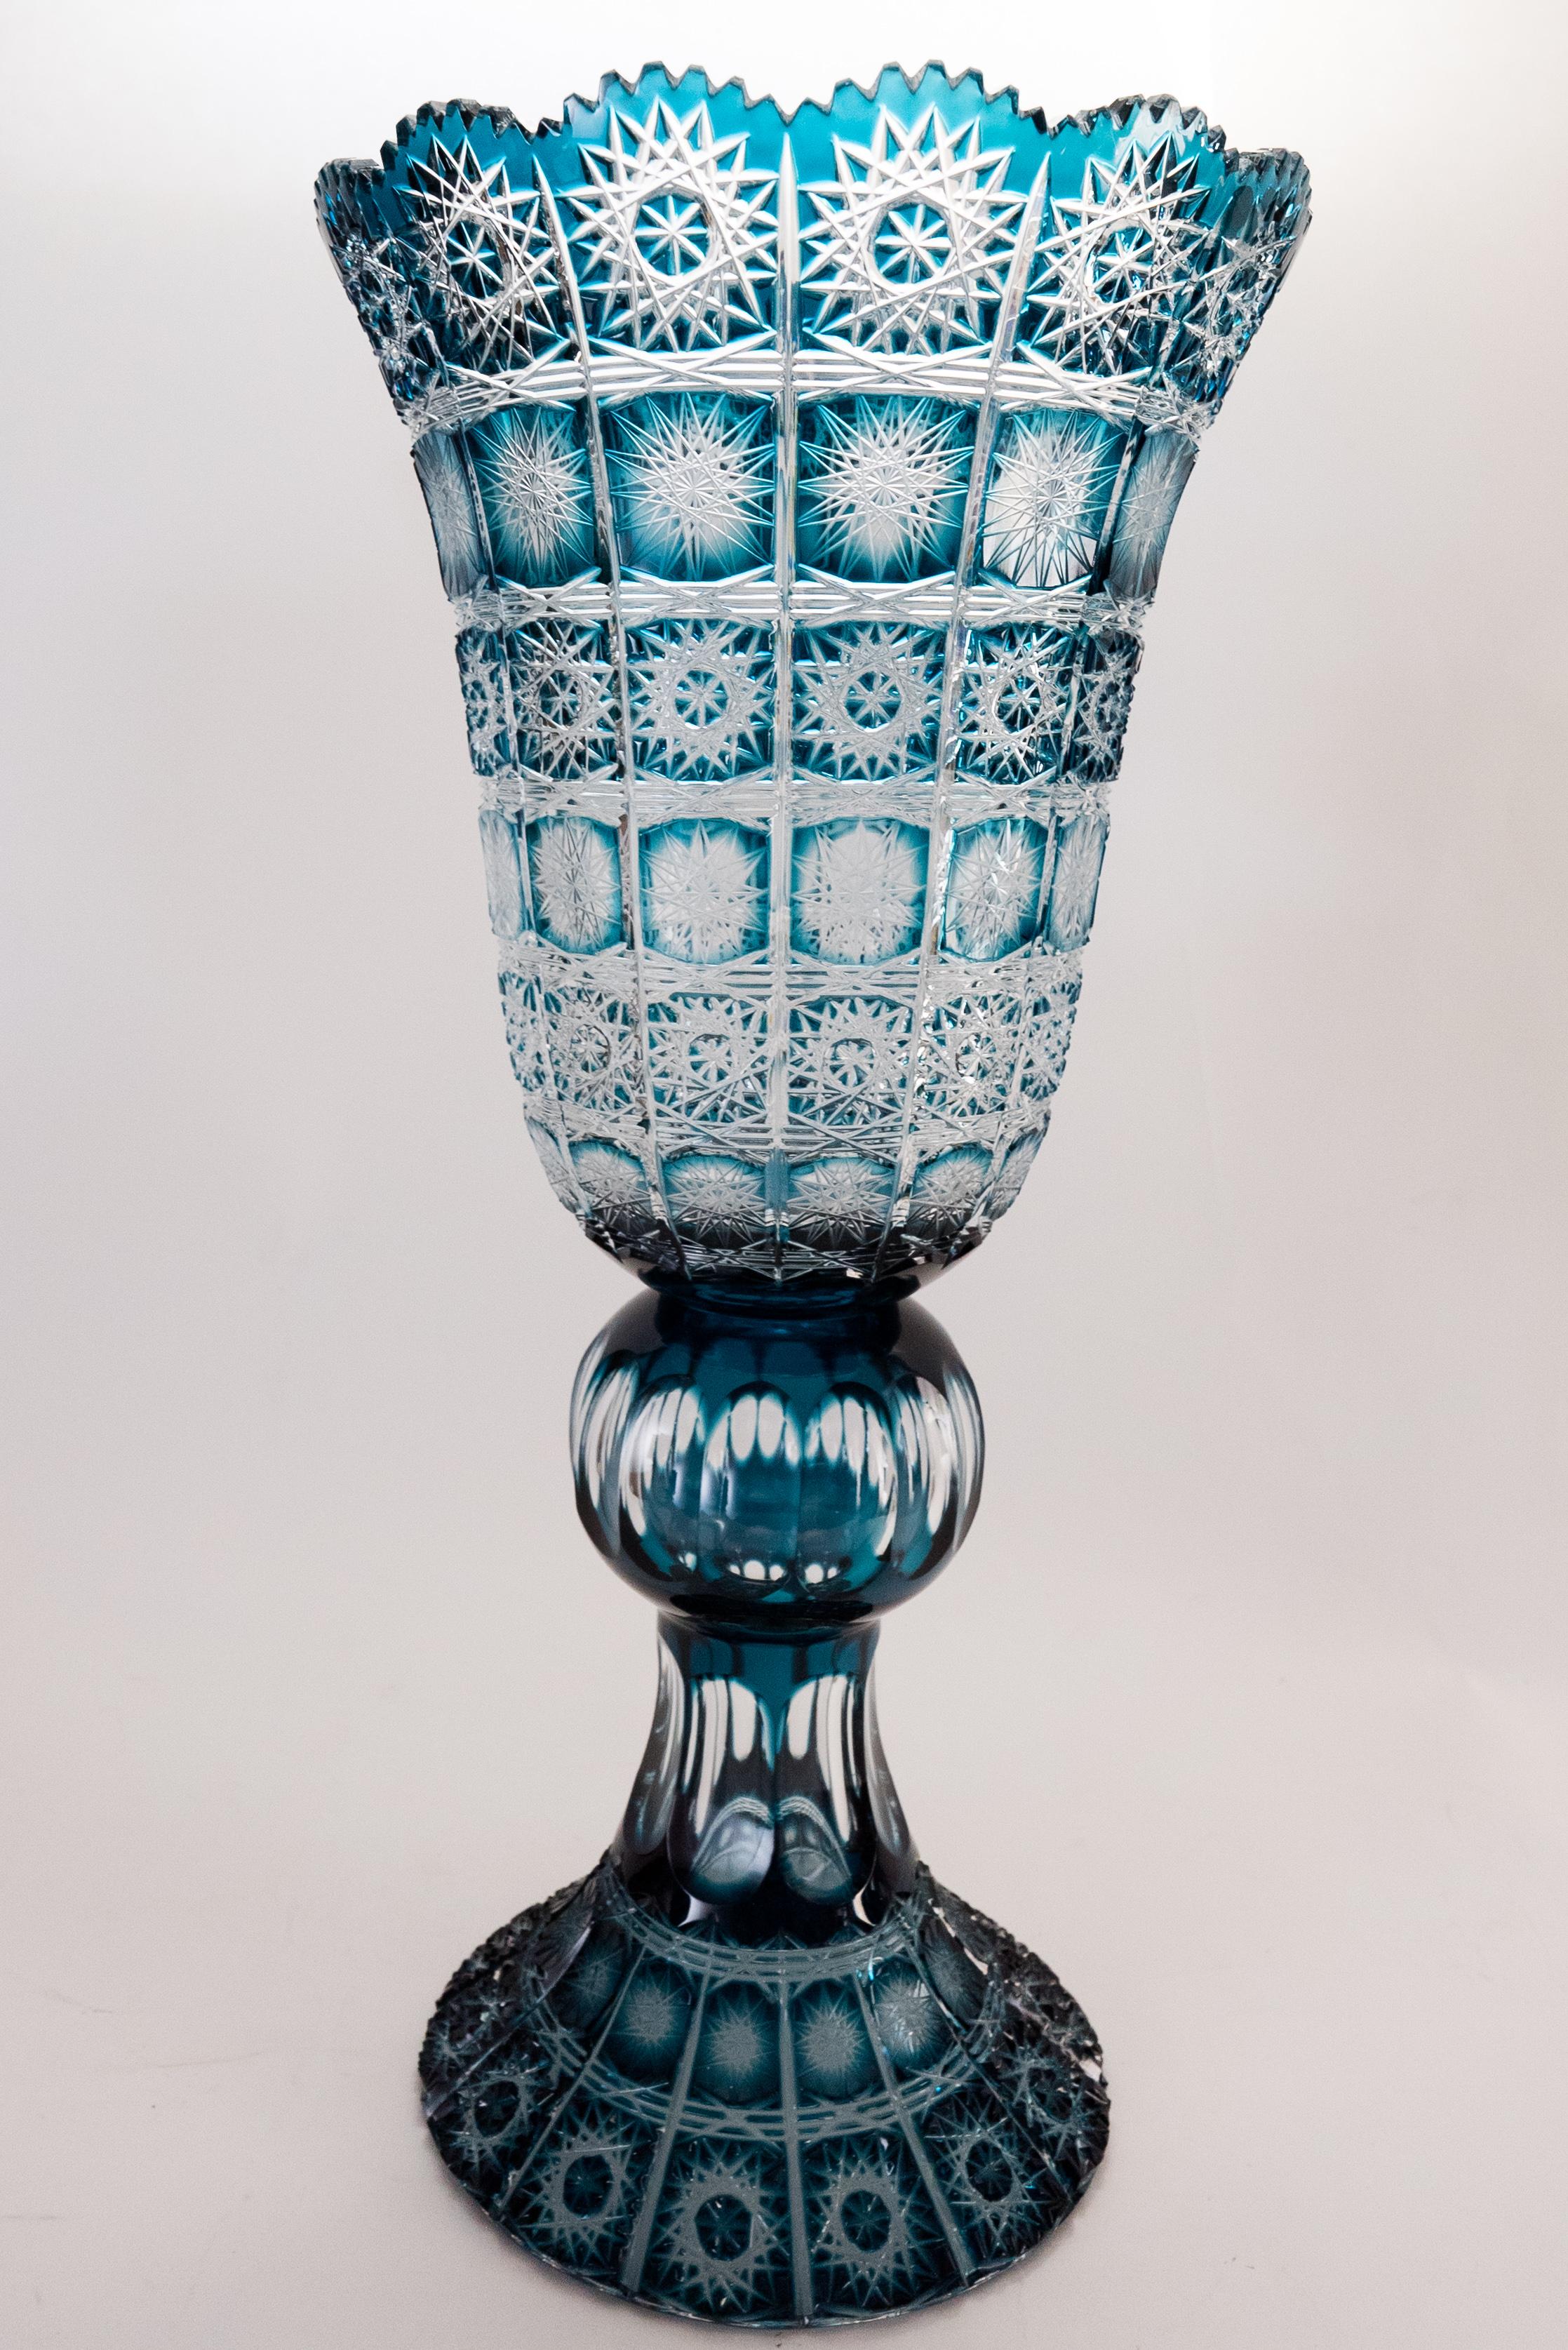 Mid-20th Century Monumental Teal or Turquoise Cut Crystal Vase, Vintage Bohemian, Very Tall